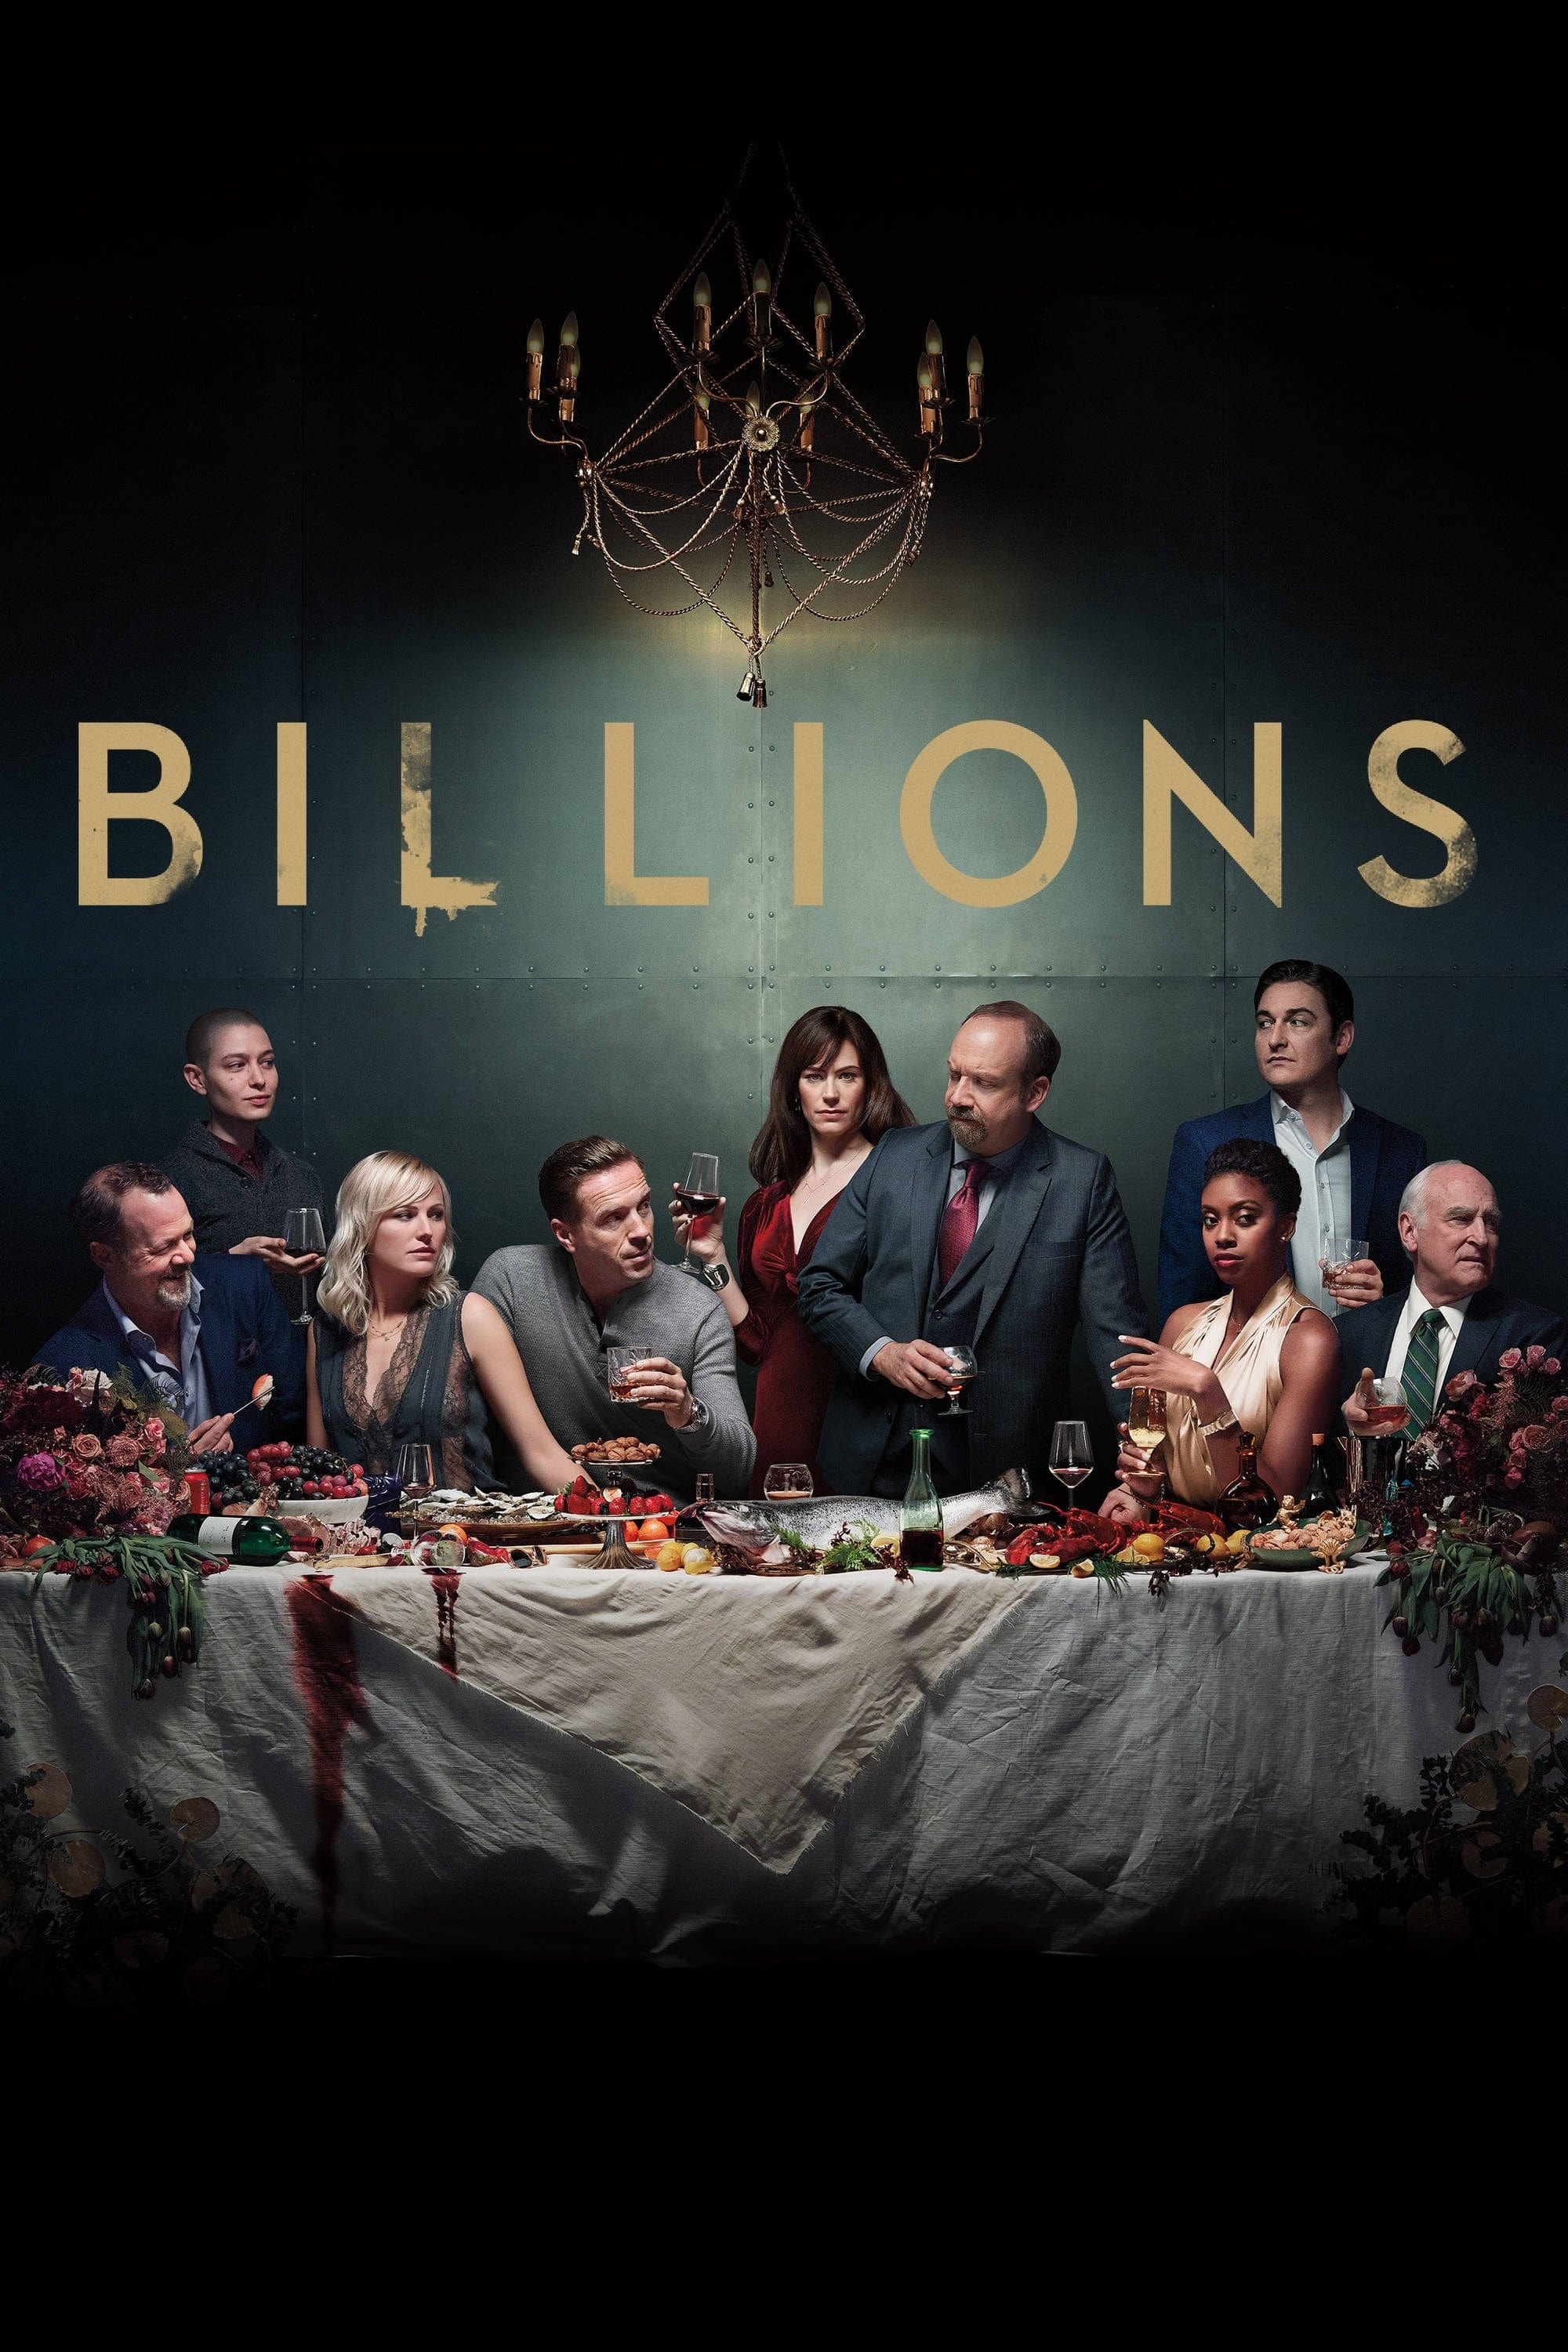 Billions Season 3